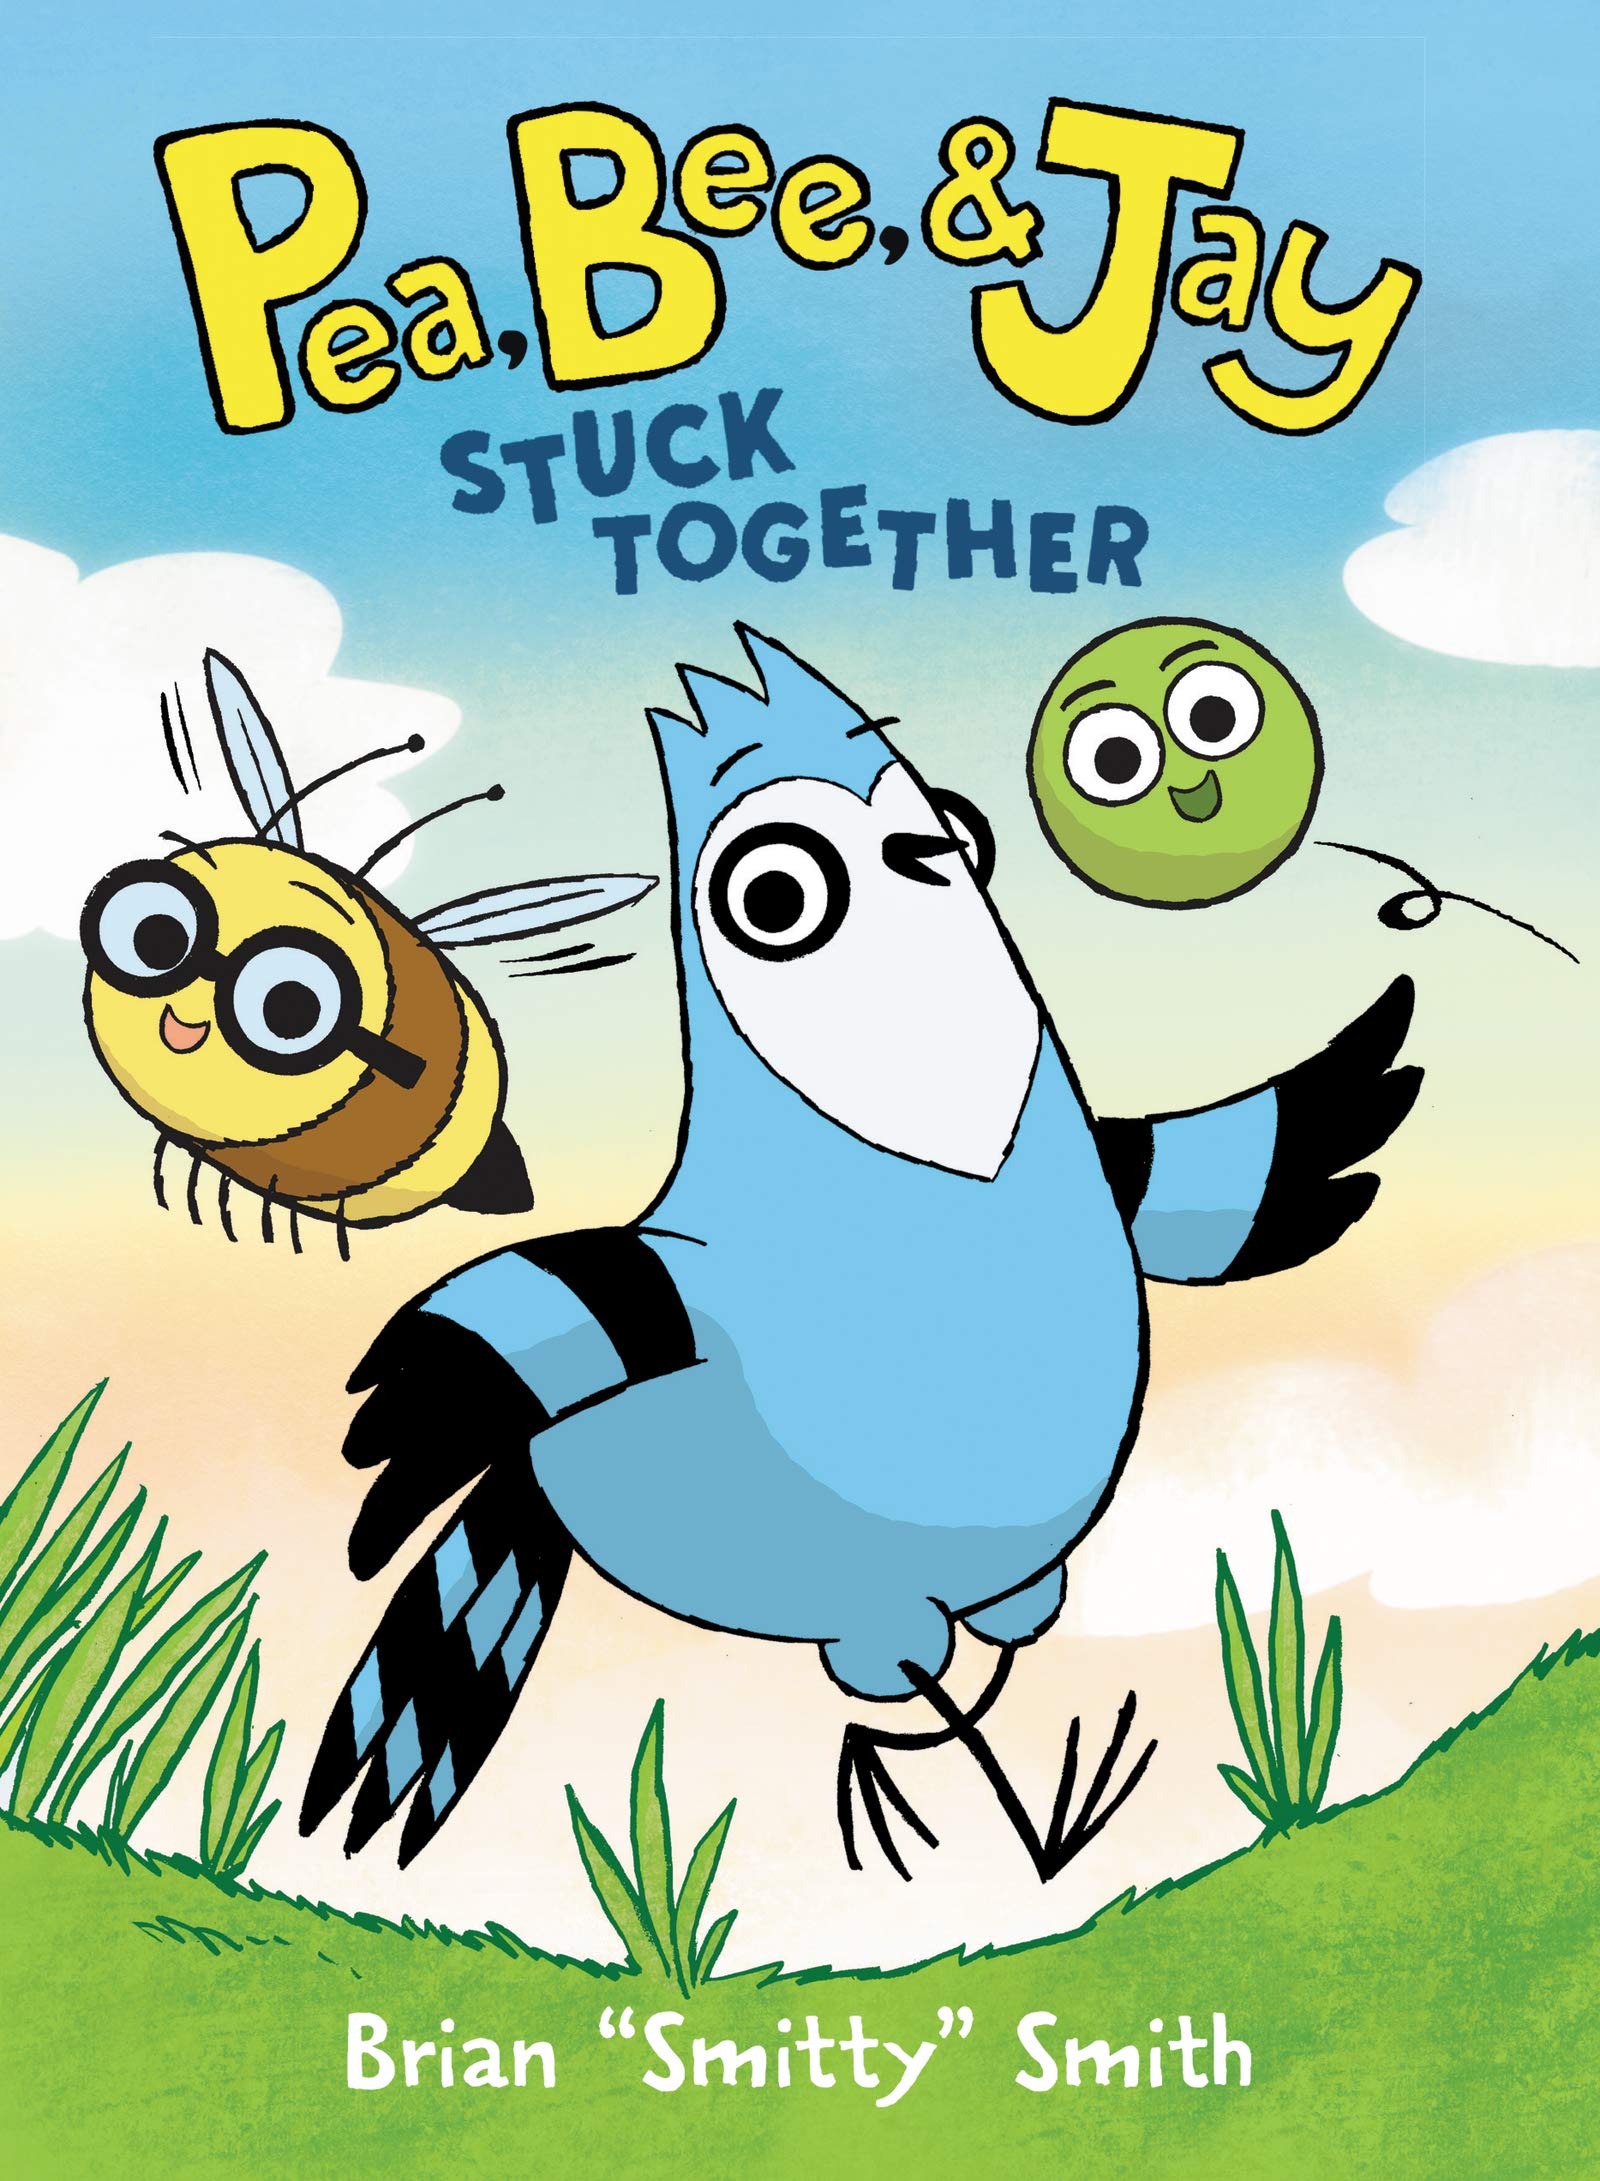 Pea, Bee, & Jay: Stuck Together